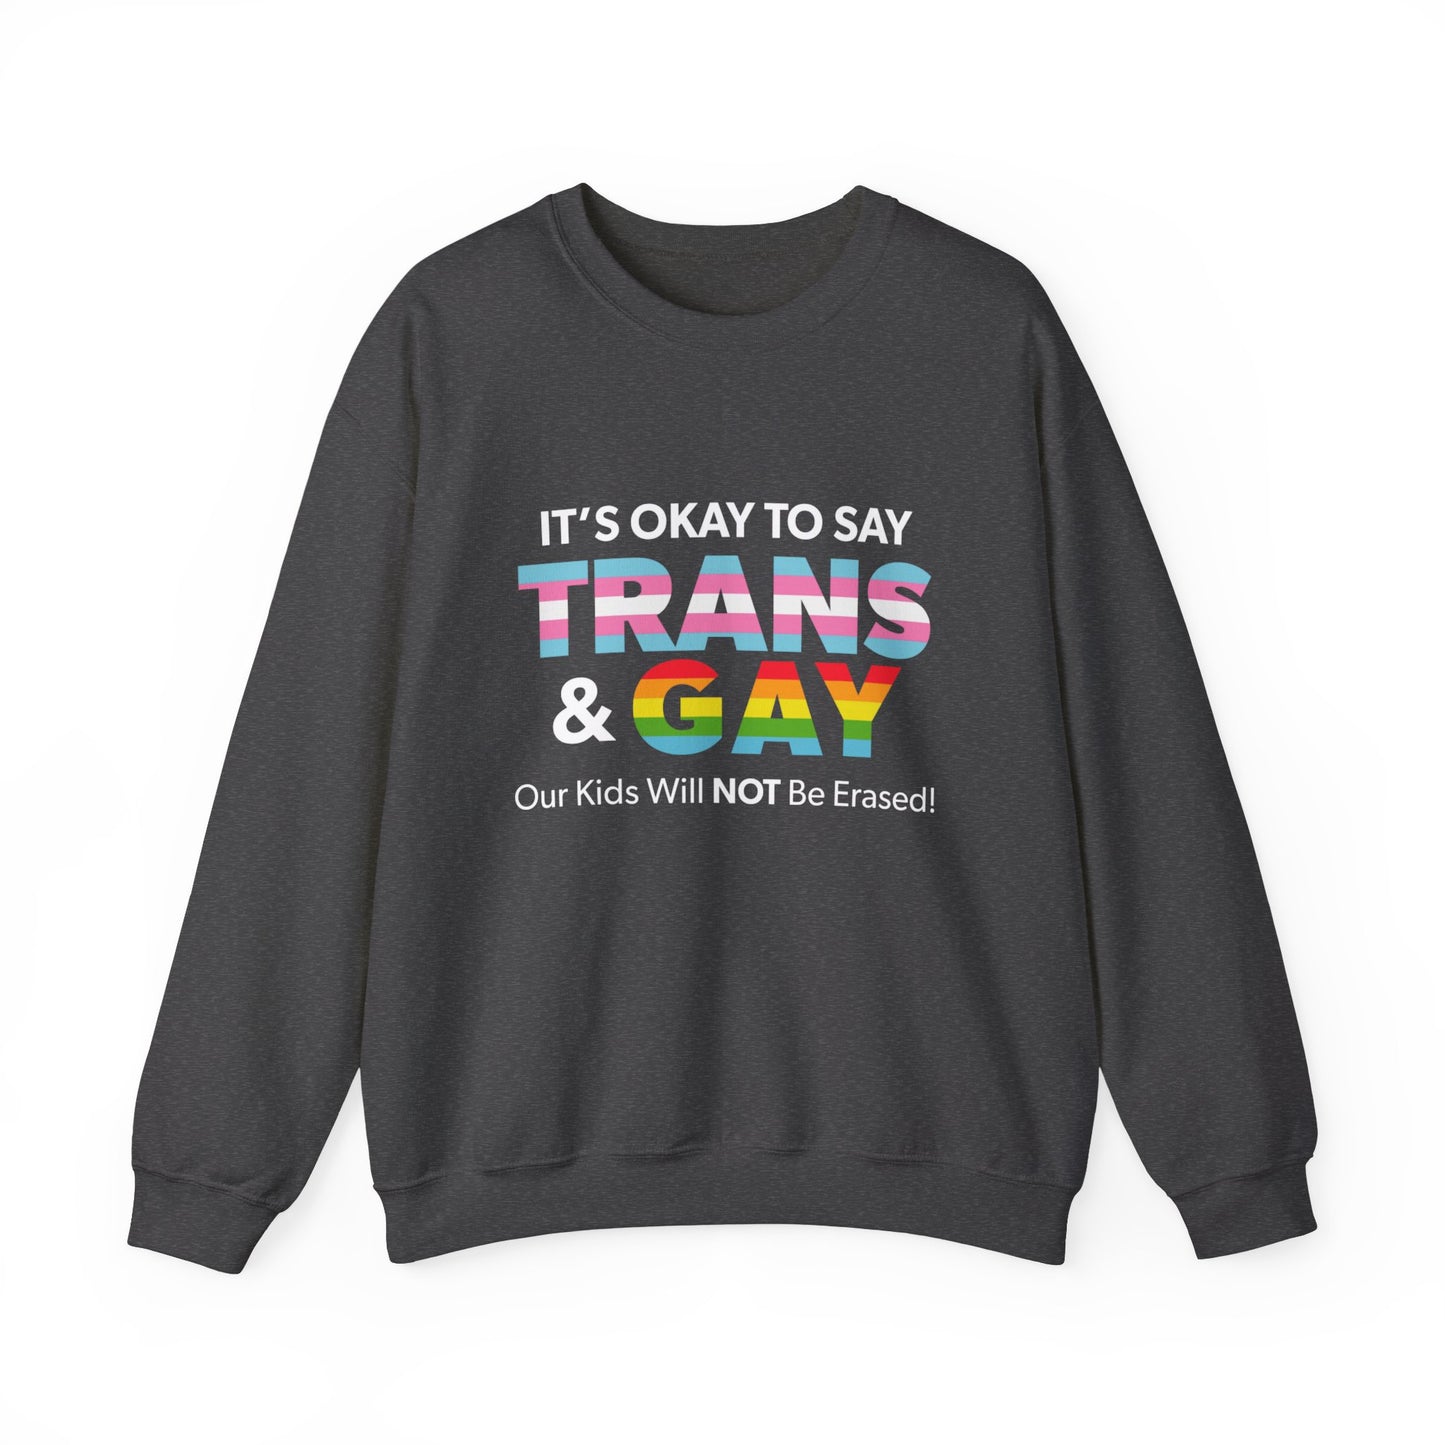 “It’s Okay to Say Trans & Gay” Unisex Sweatshirt